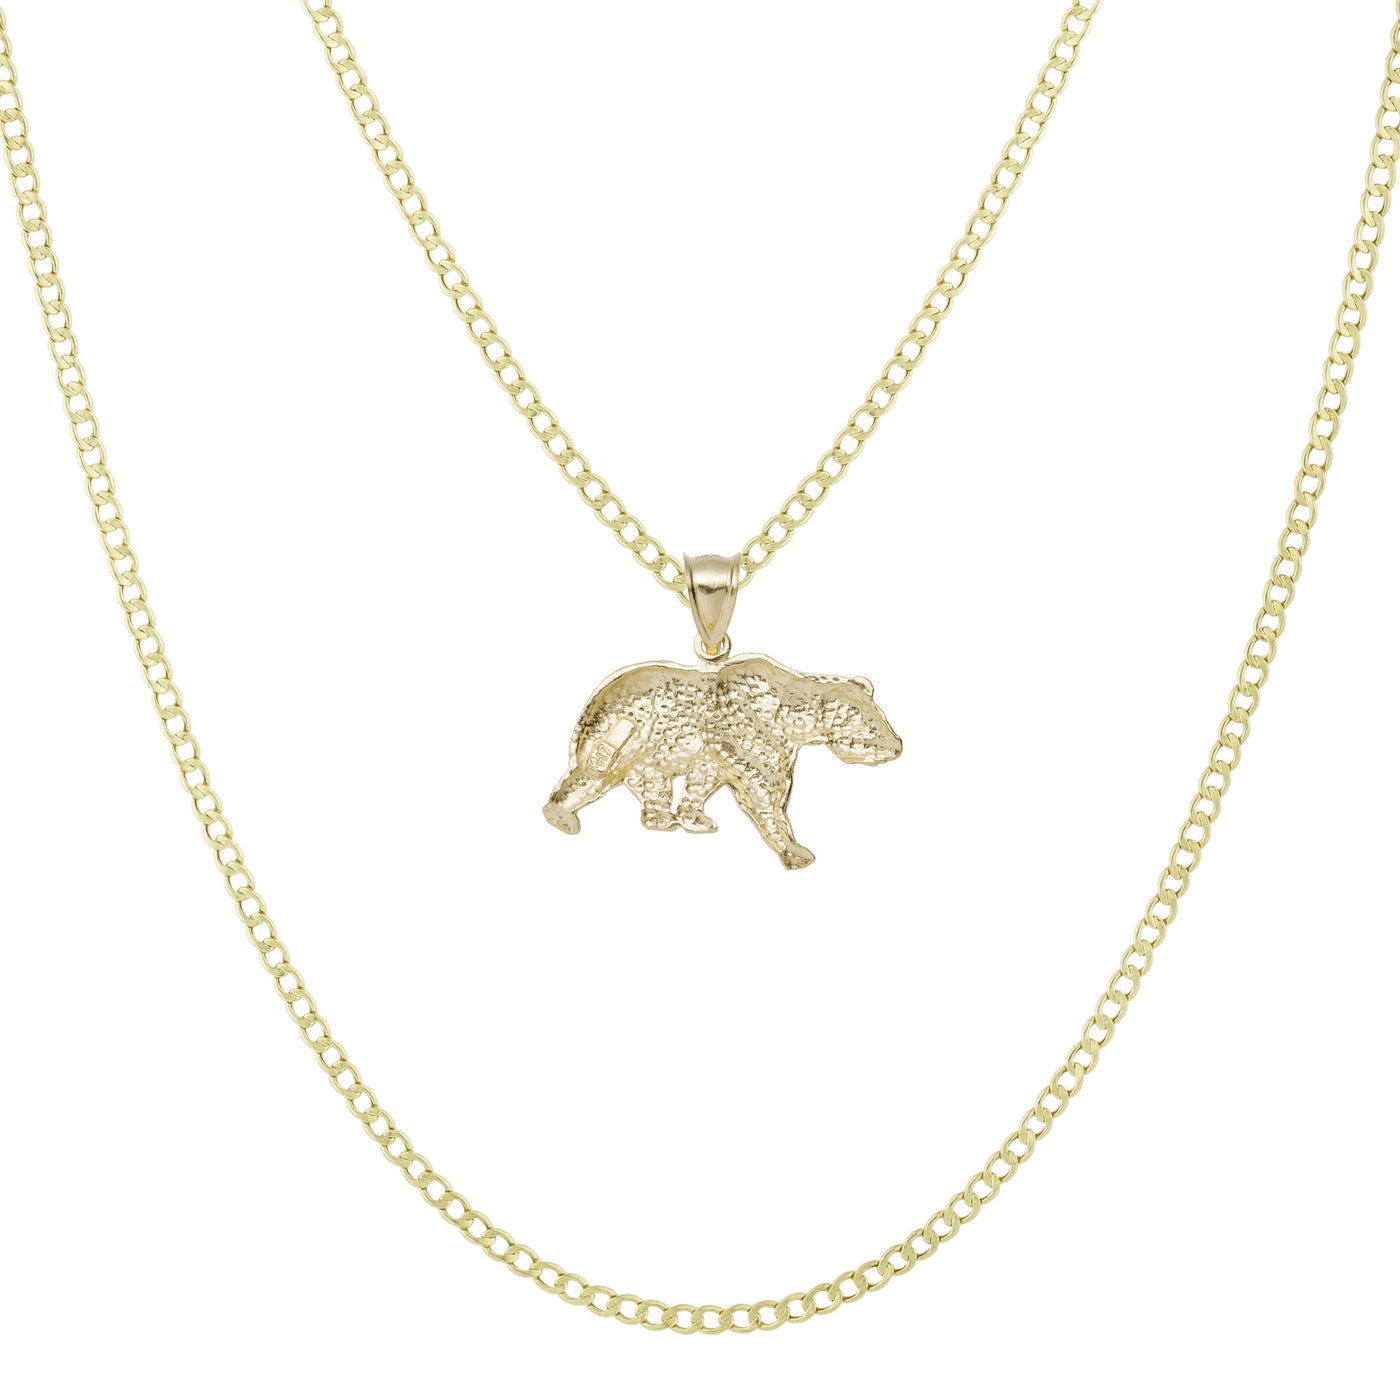 1" Diamond Cut Bear Pendant & Chain Necklace Set 10K Yellow Gold